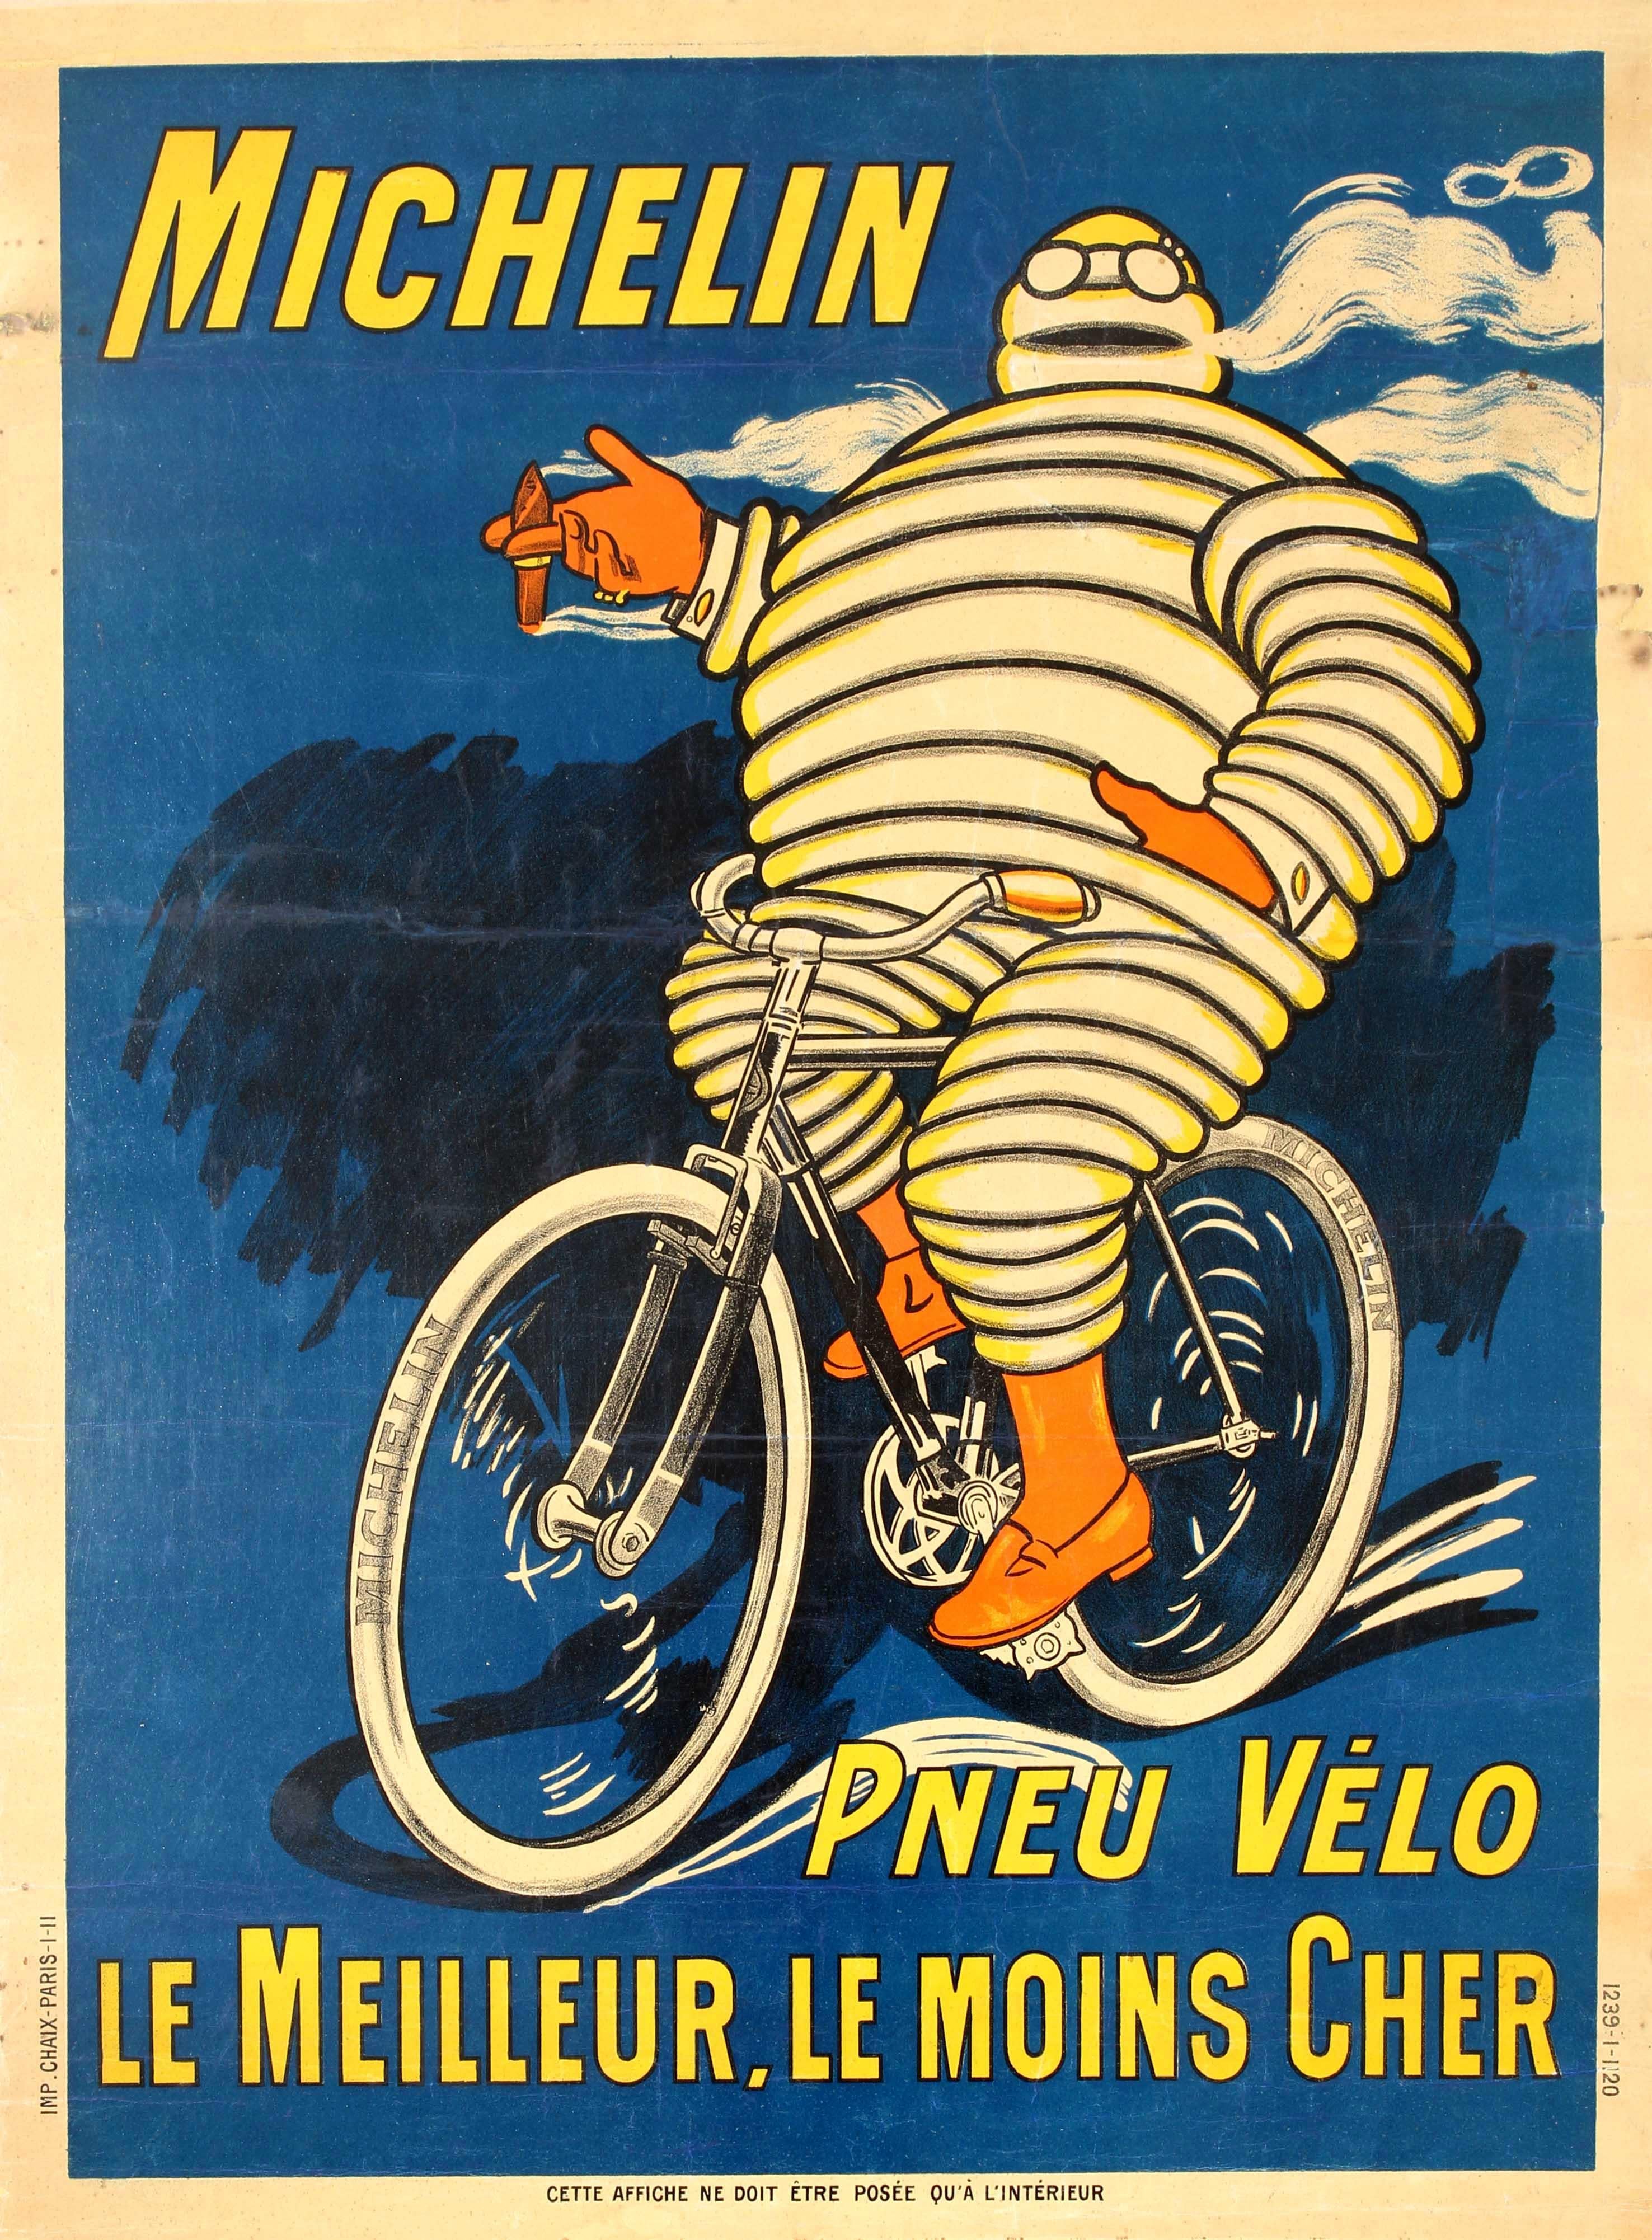 Unknown Print - Original Antique Bibendum Michelin Man Poster - Michelin Pneu Velo Bicycle Tyres